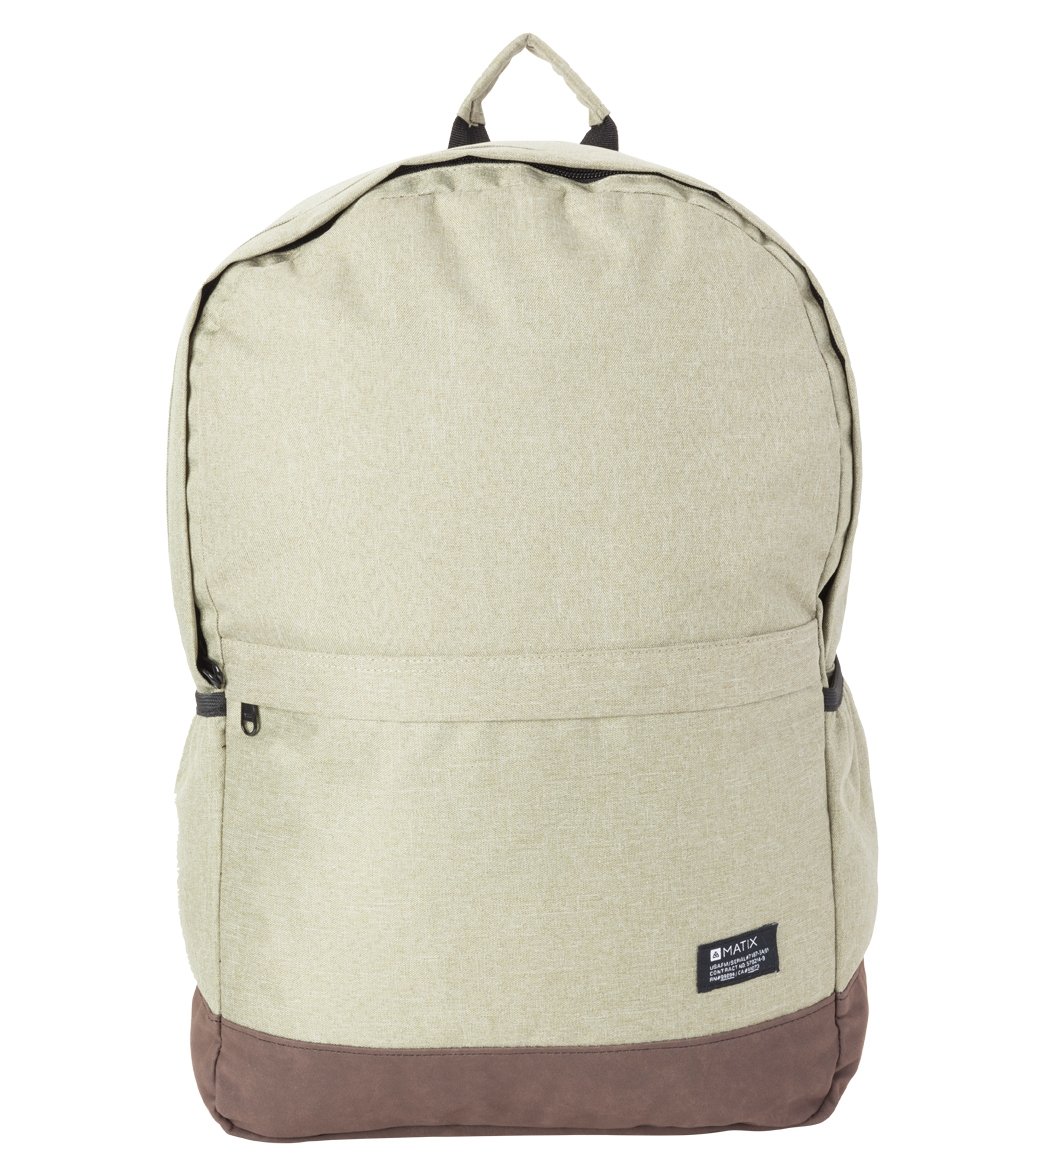 Matix Men's Standard Backpack at SwimOutlet.com - Free Shipping